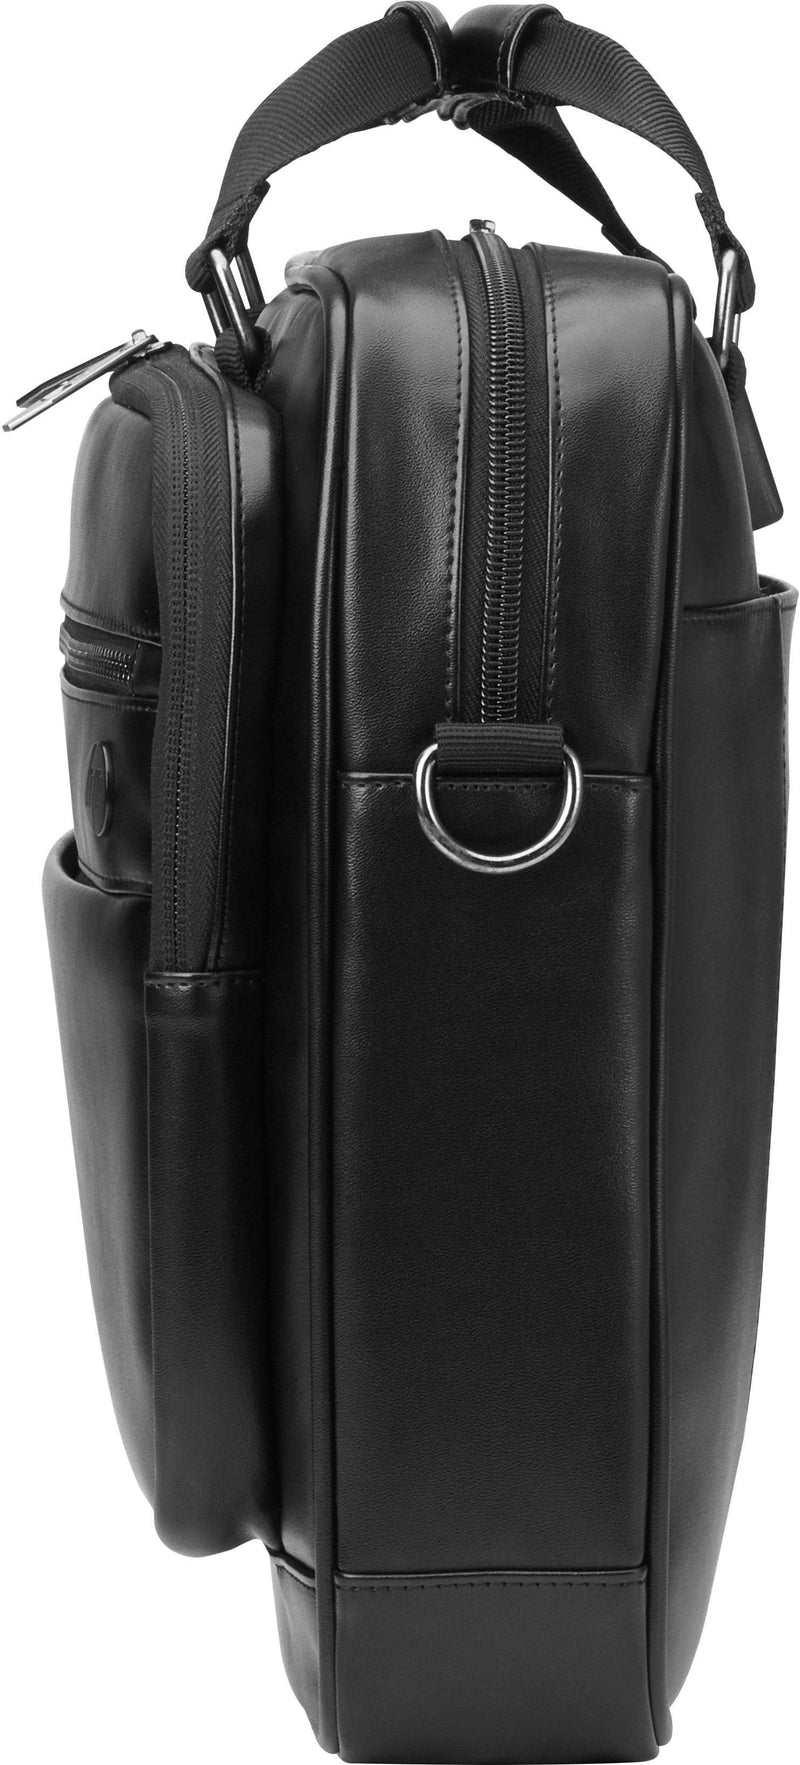 HP Executive Notebook Case 15.6-inch Toploader Bag Black 6KD09AA